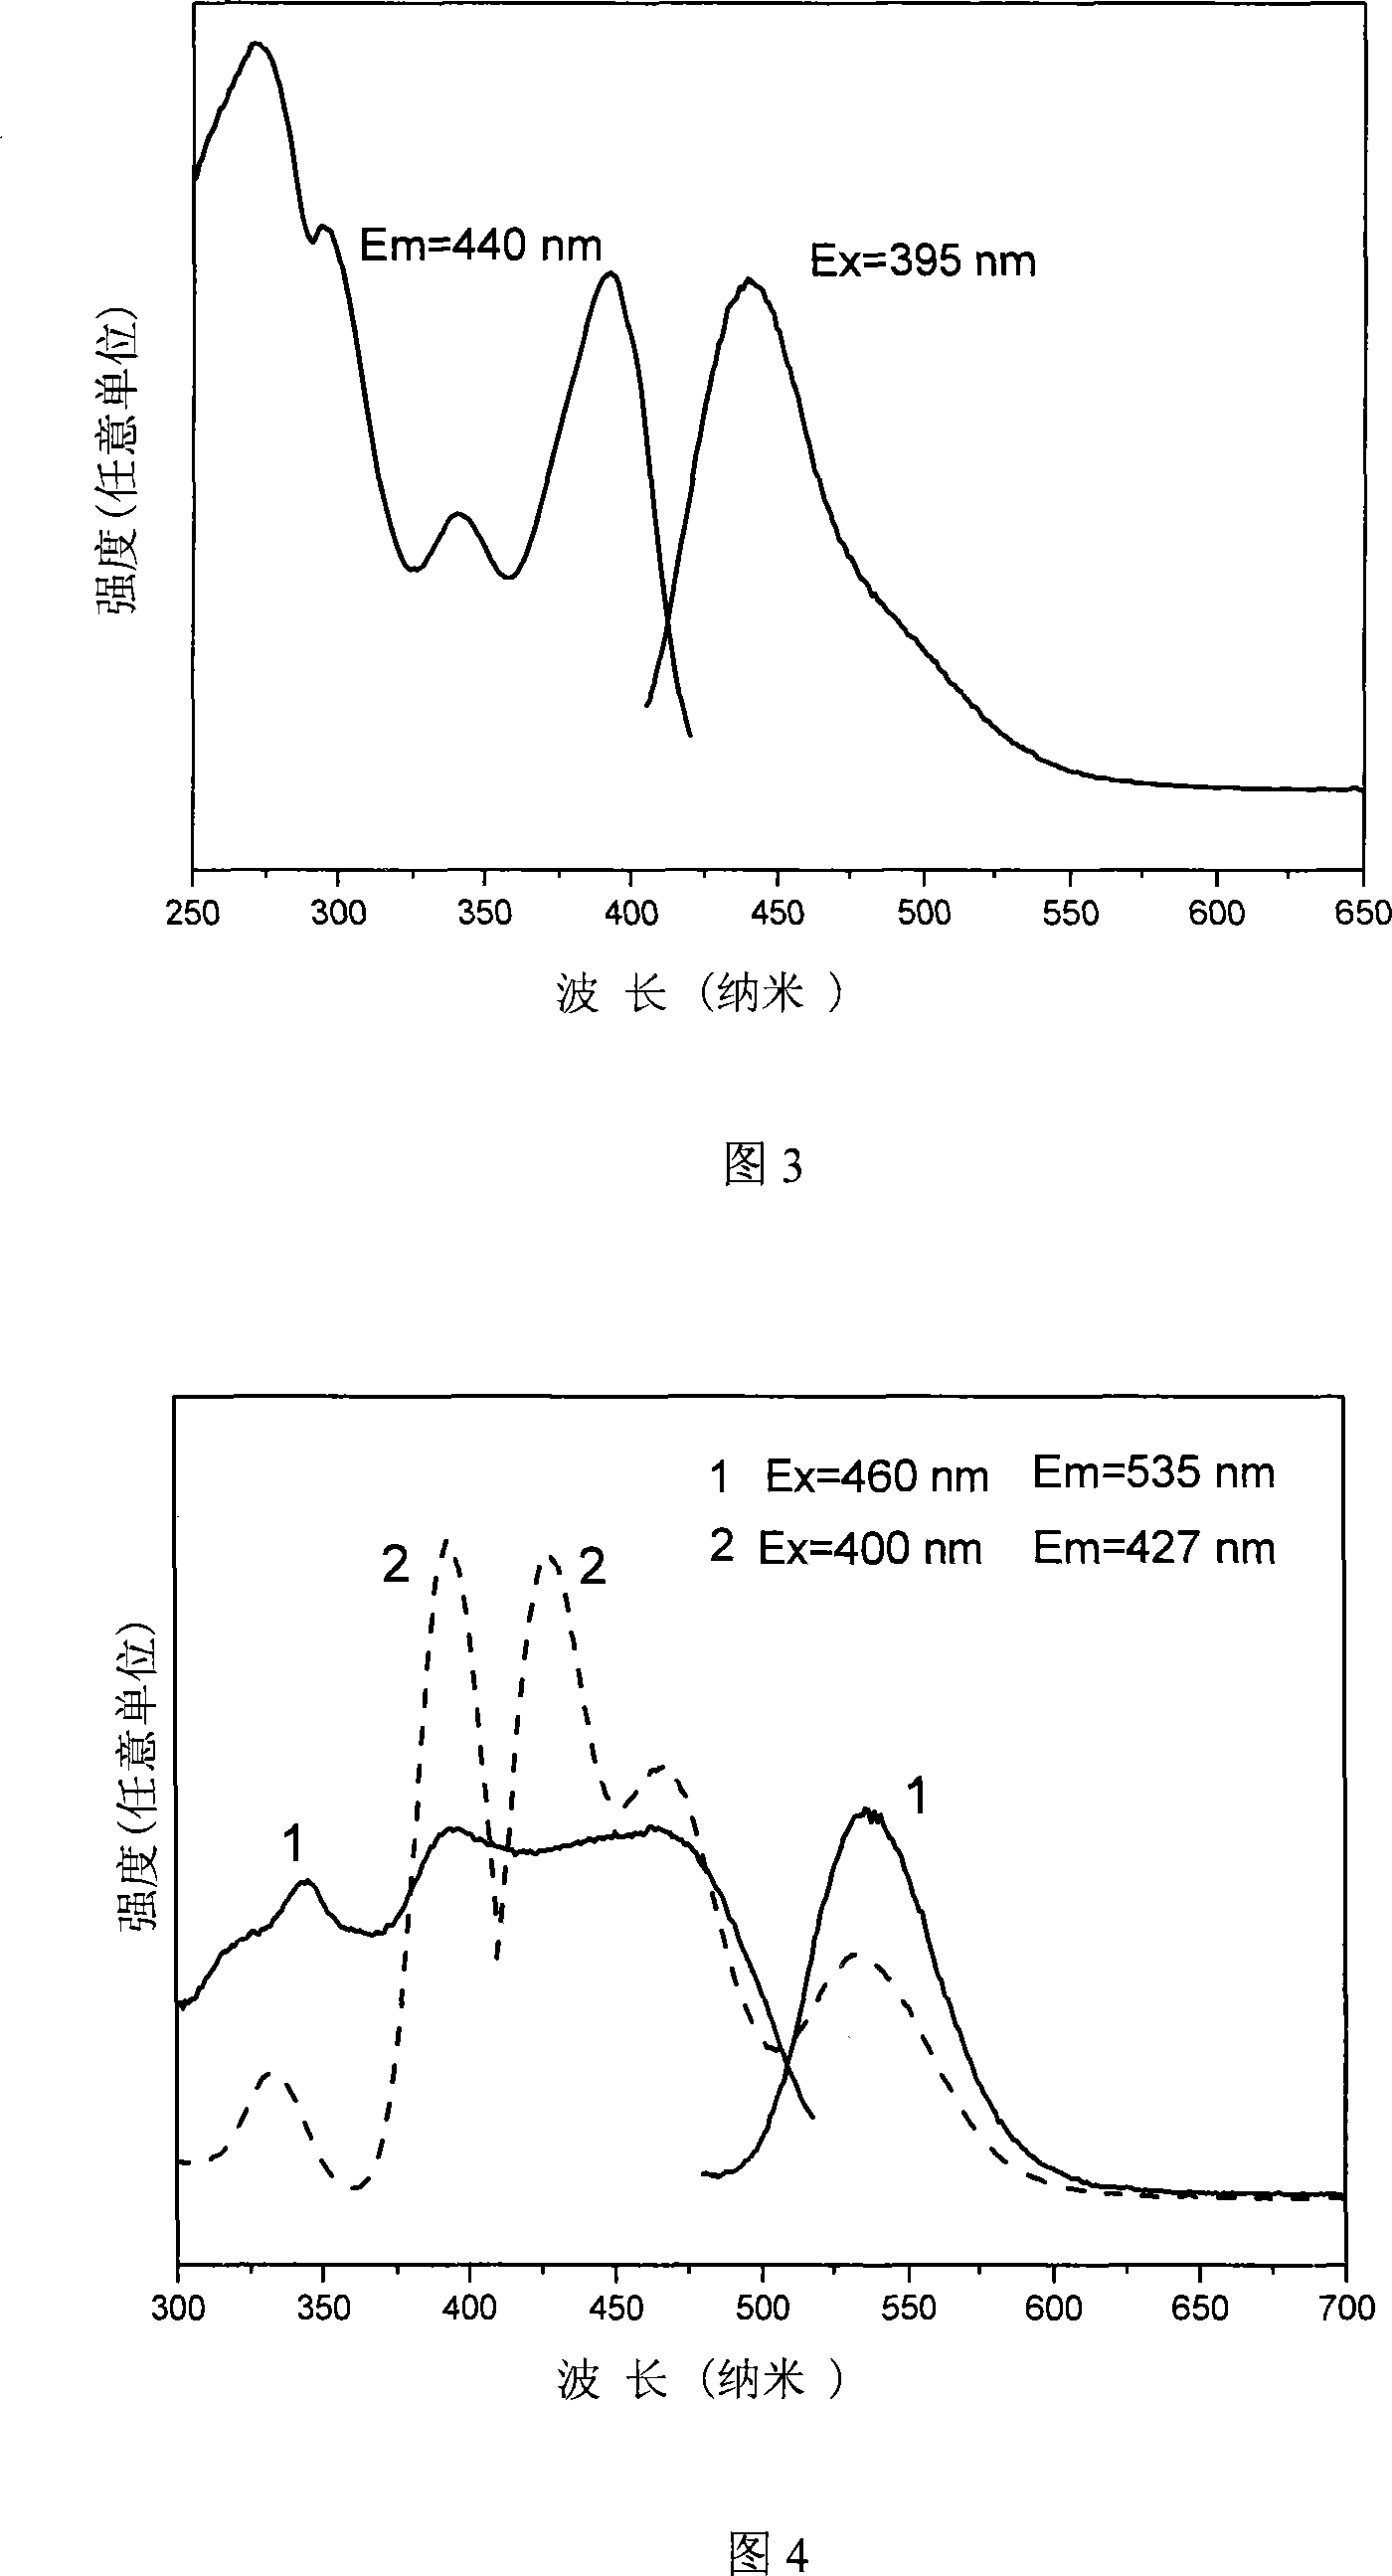 Phosphor for GaN based light-emitting diode and method for preparing same